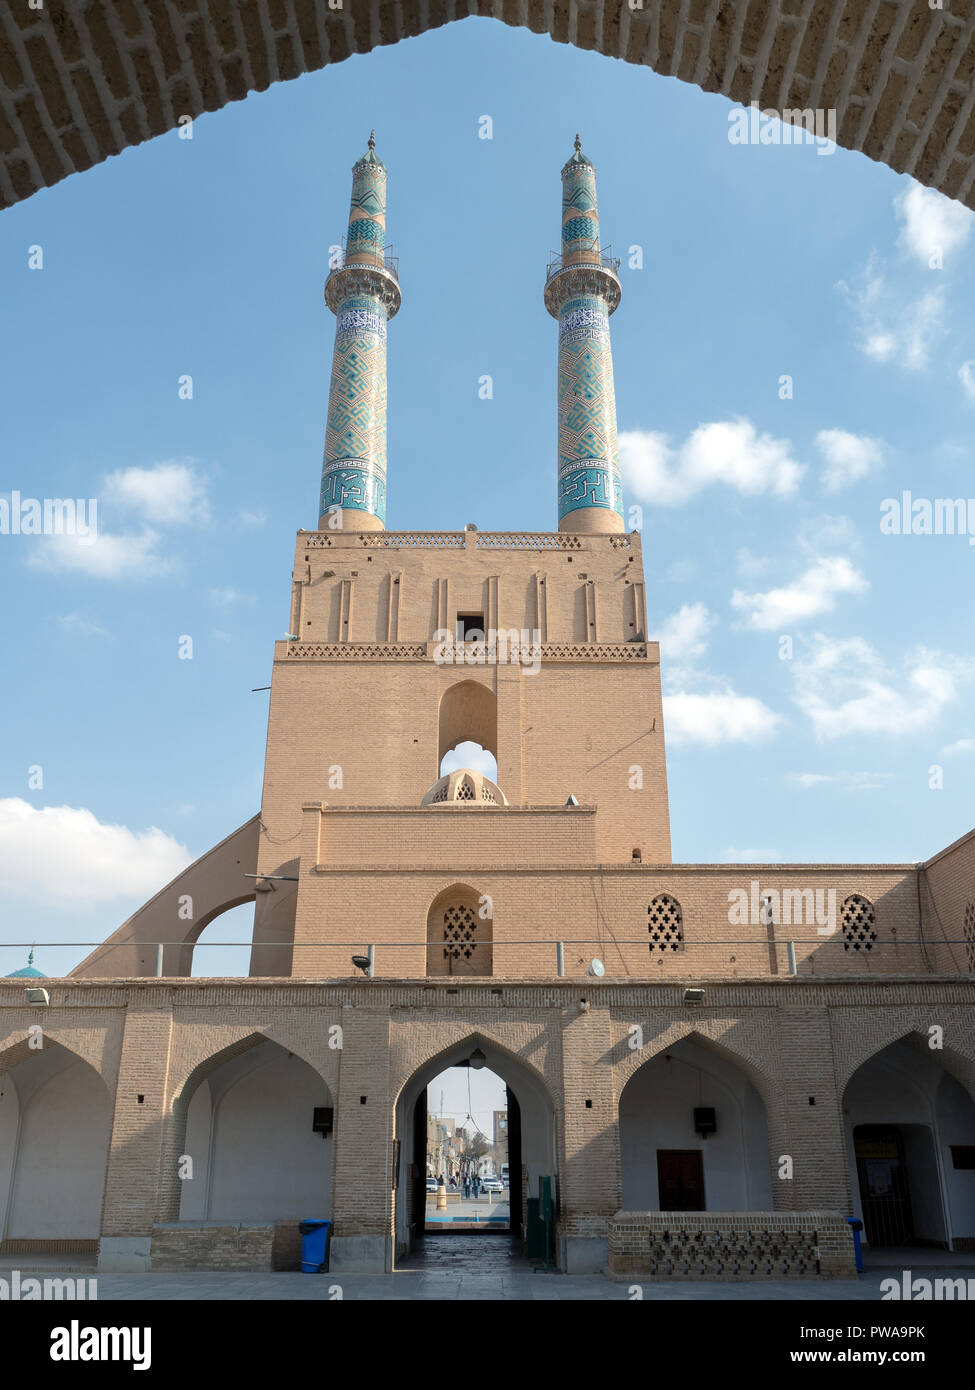 Jameh mosque courtyard and minarets, Yazd, Iran Stock Photo